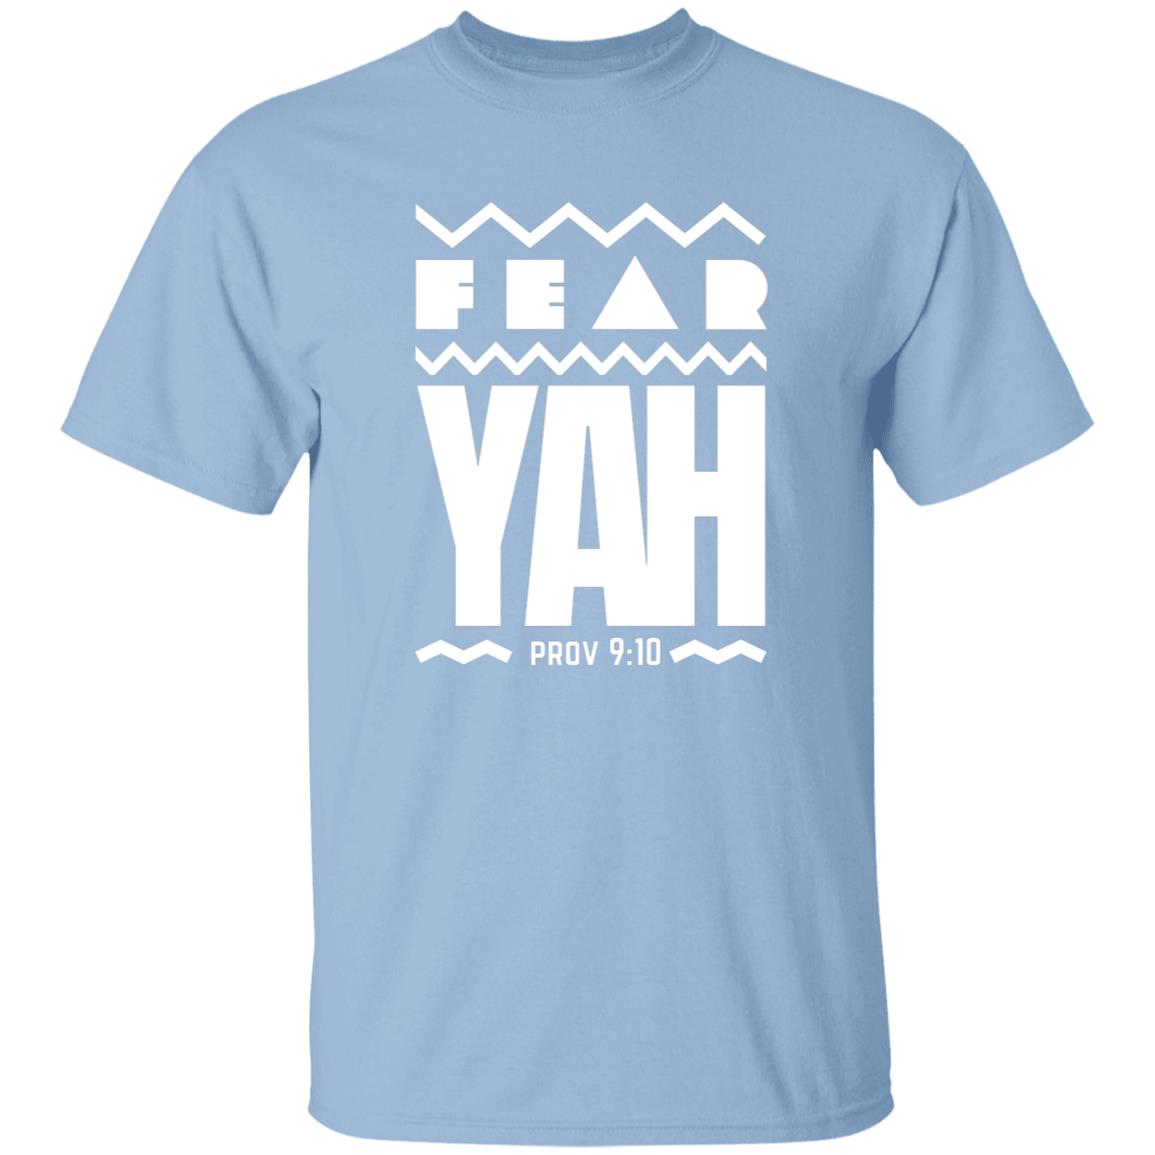 FEAR YAH Youth 5.3 oz 100% Cotton T-Shirt